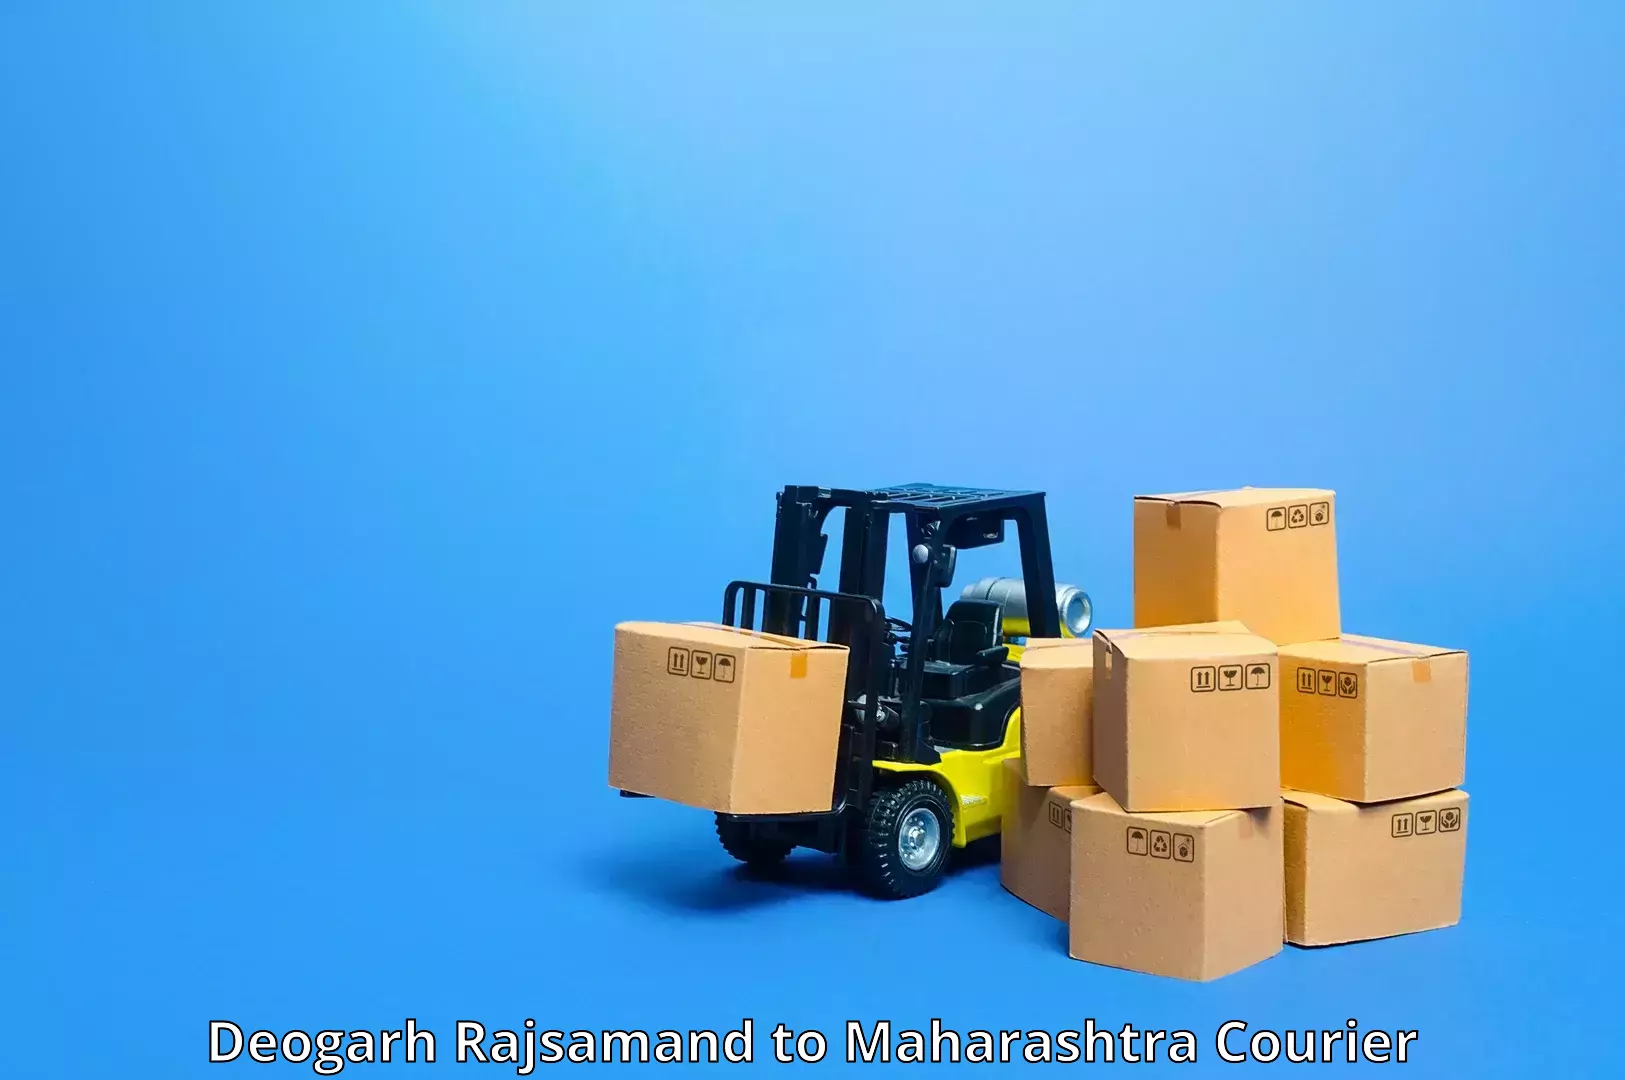 Express courier capabilities Deogarh Rajsamand to Chakan